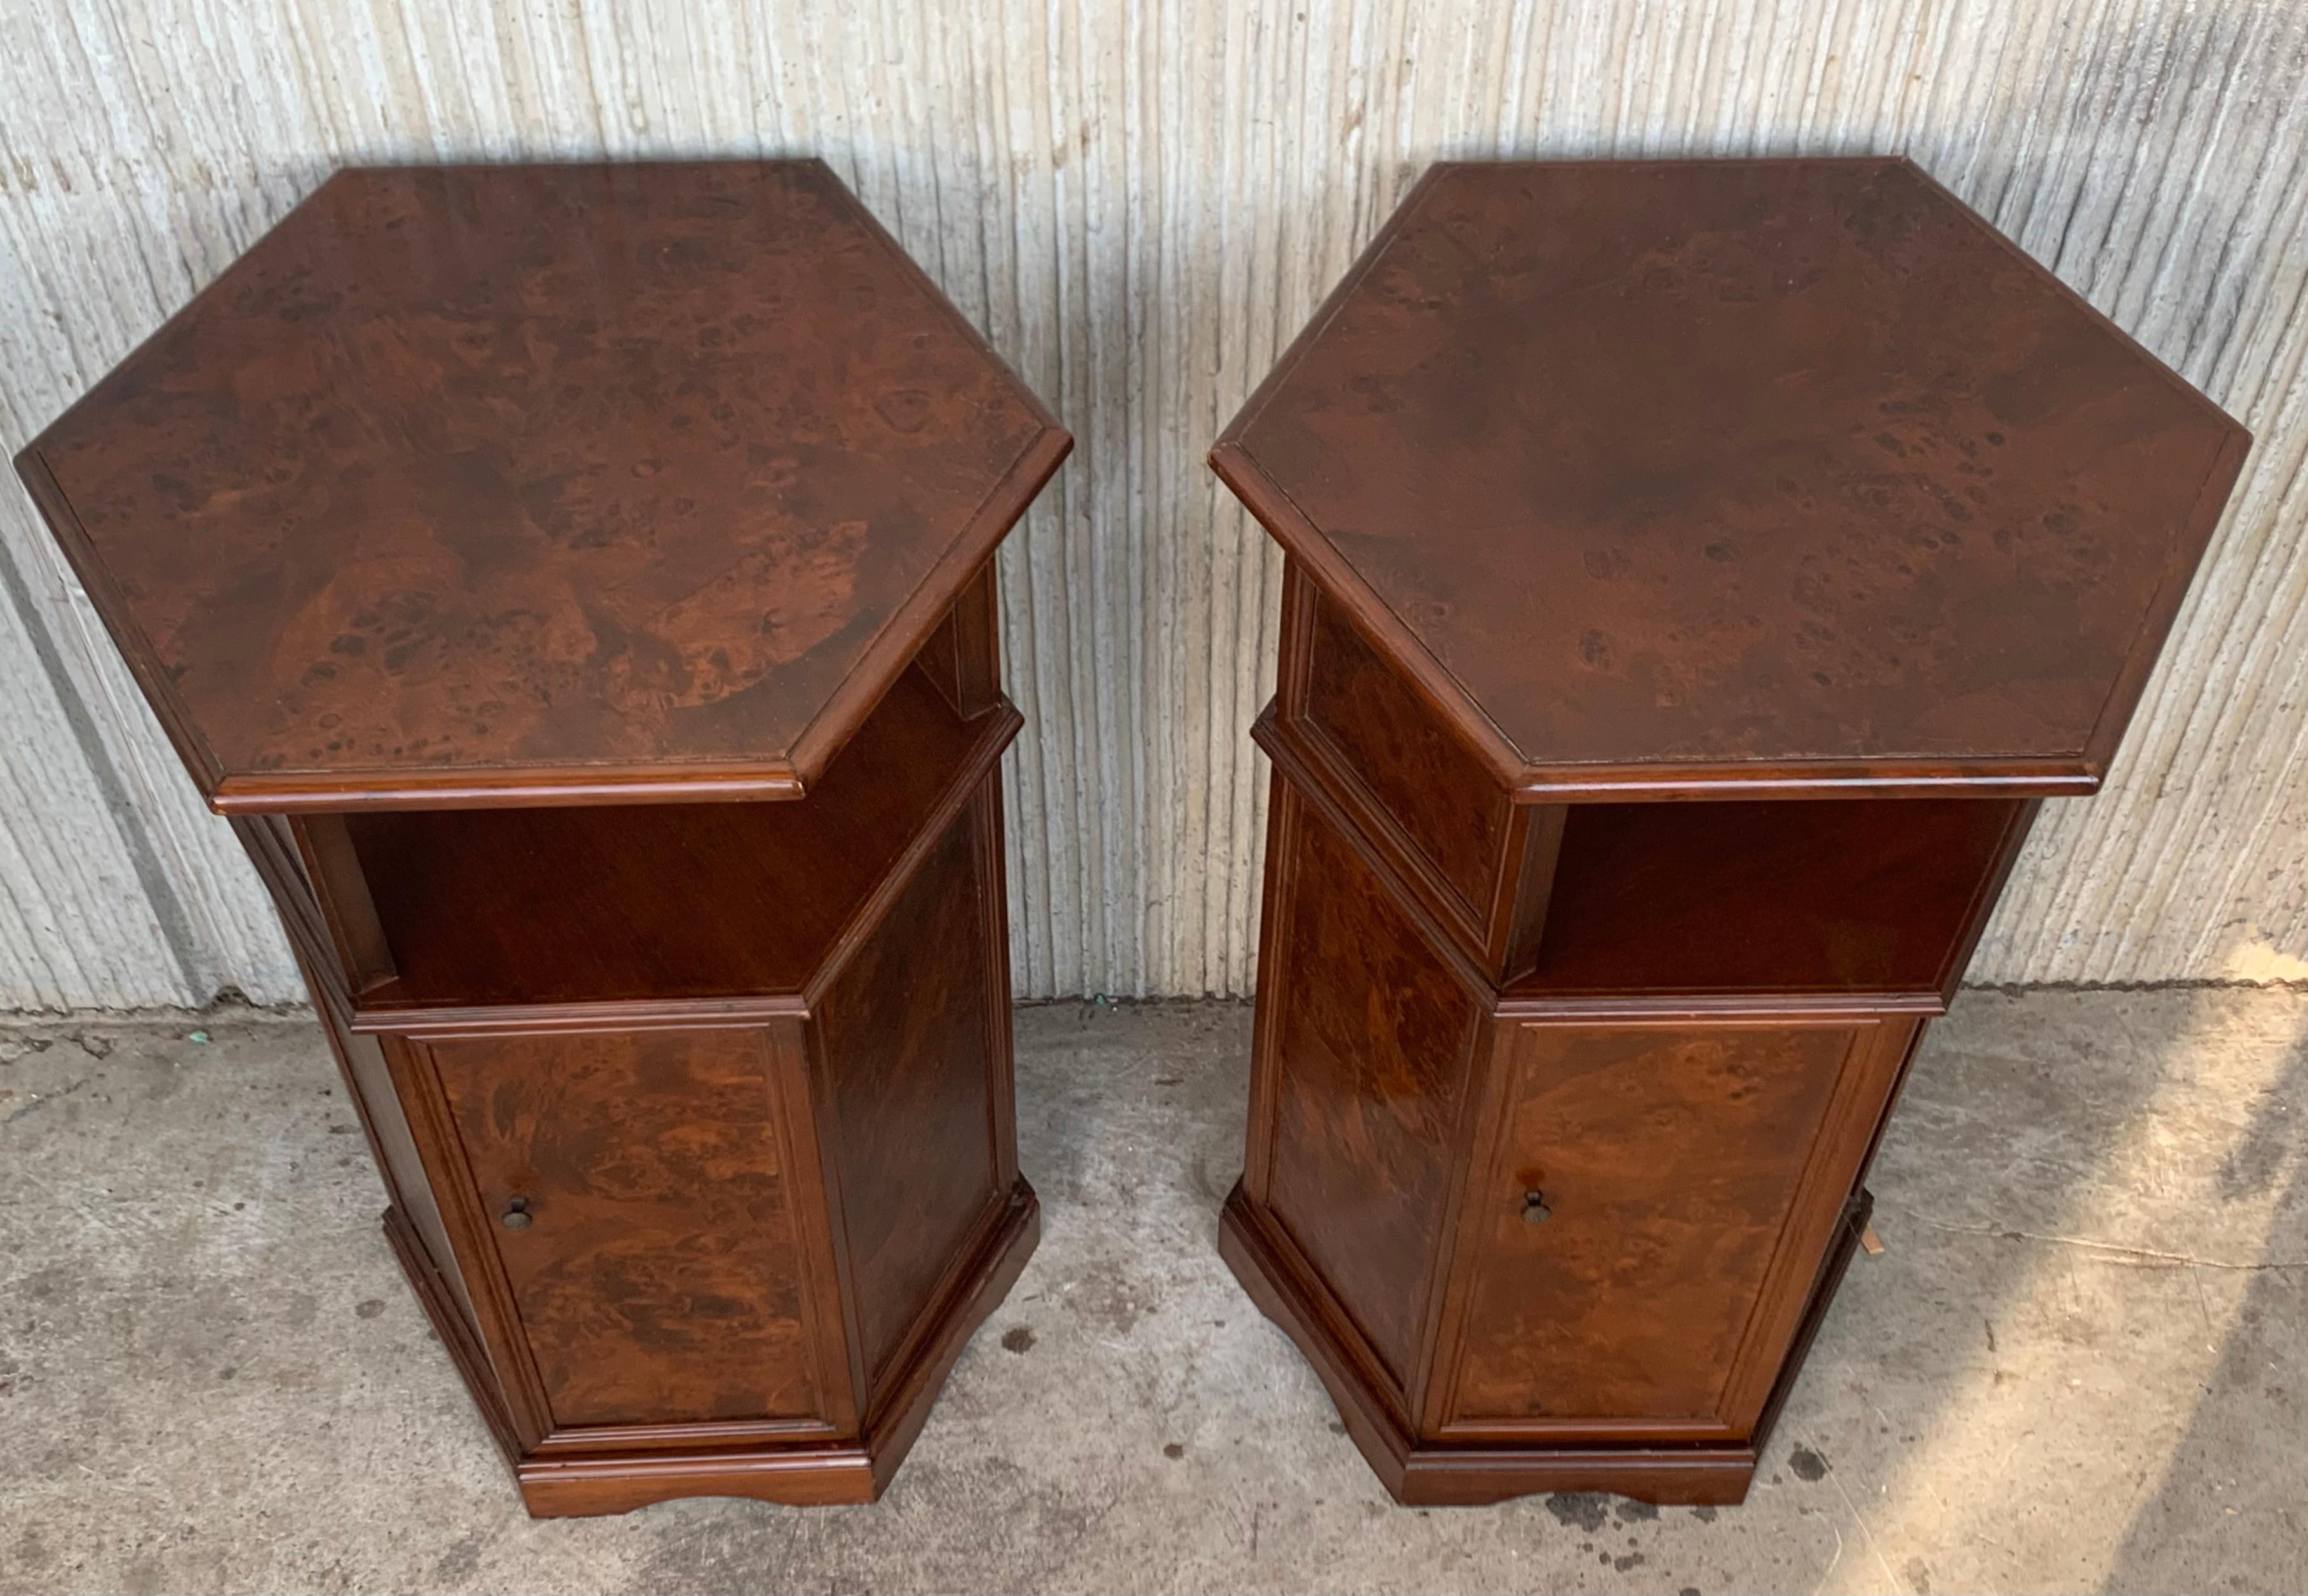 1900s Italian Hexagonal Pedestal Pilar Maple Cupboards End Tables, a Pair For Sale 1